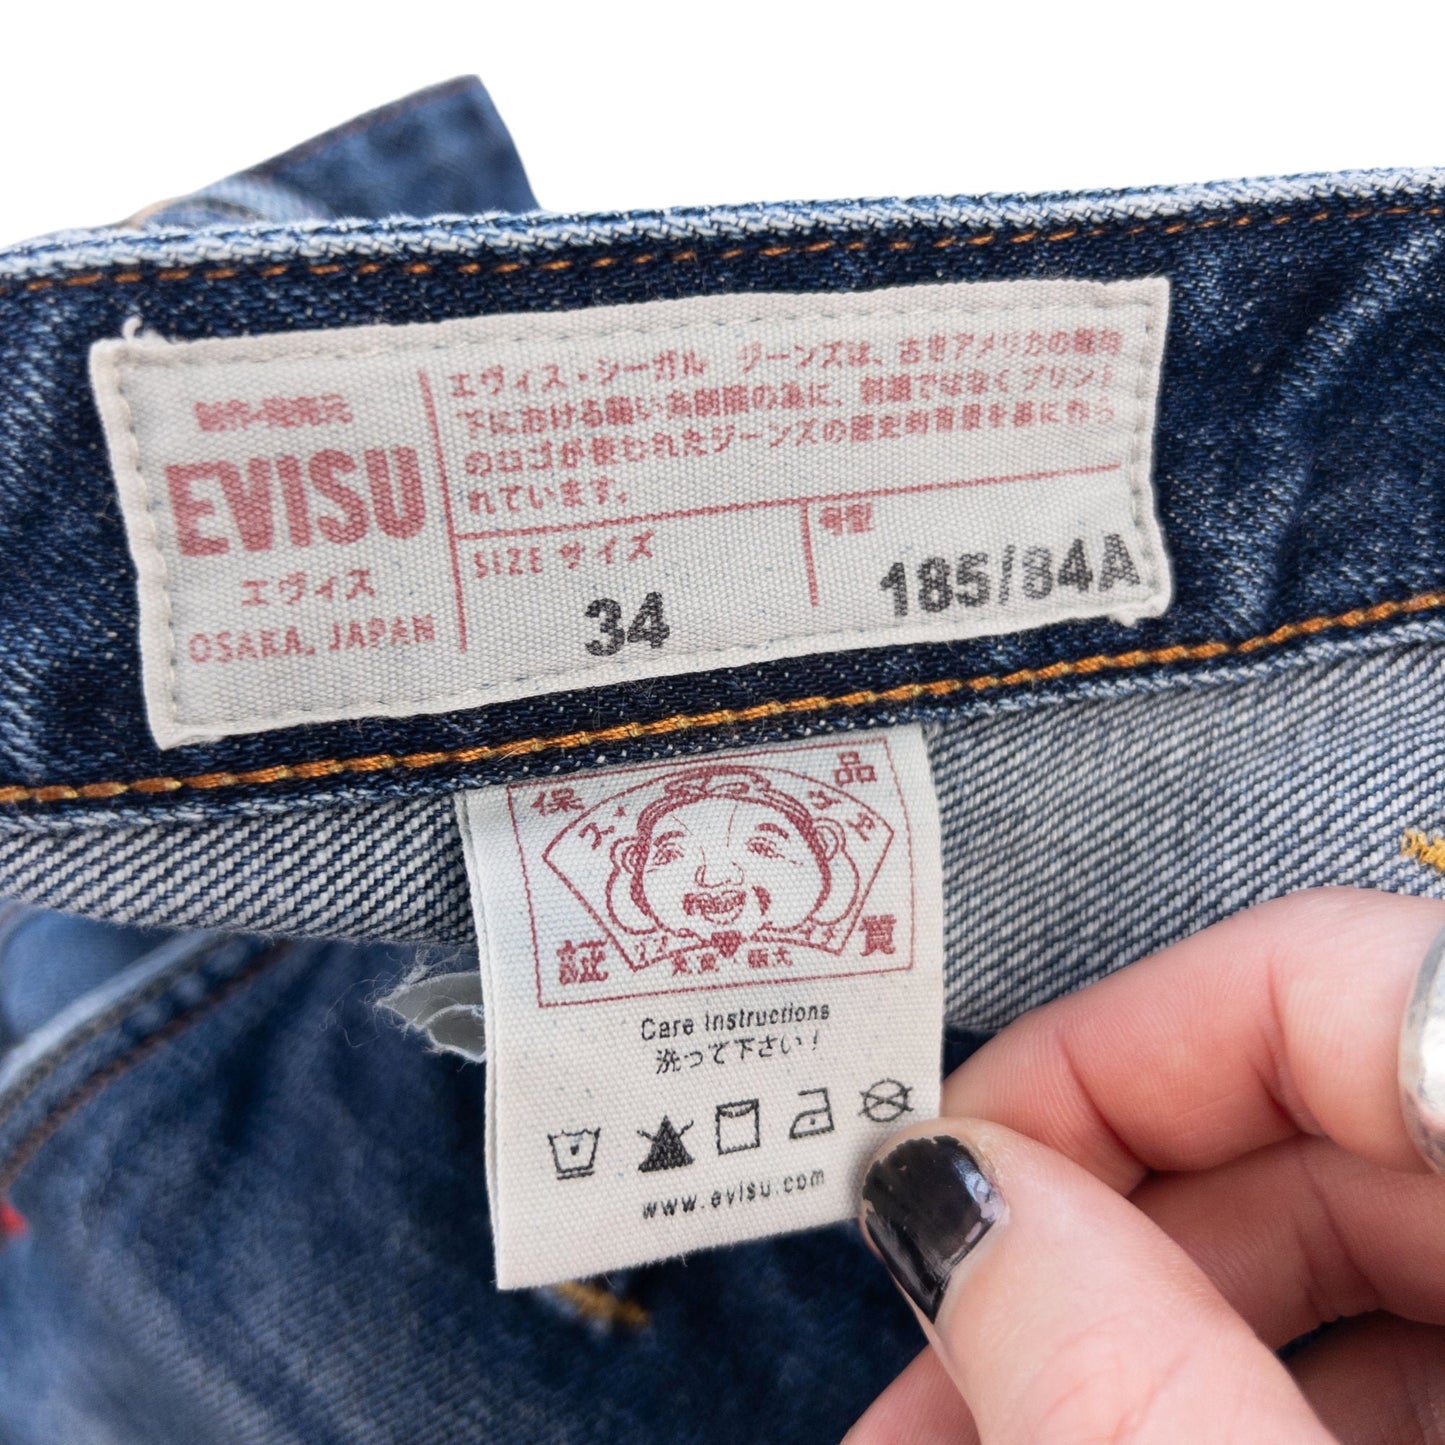 Vintage Evisu Japanese Denim Jeans Size W33